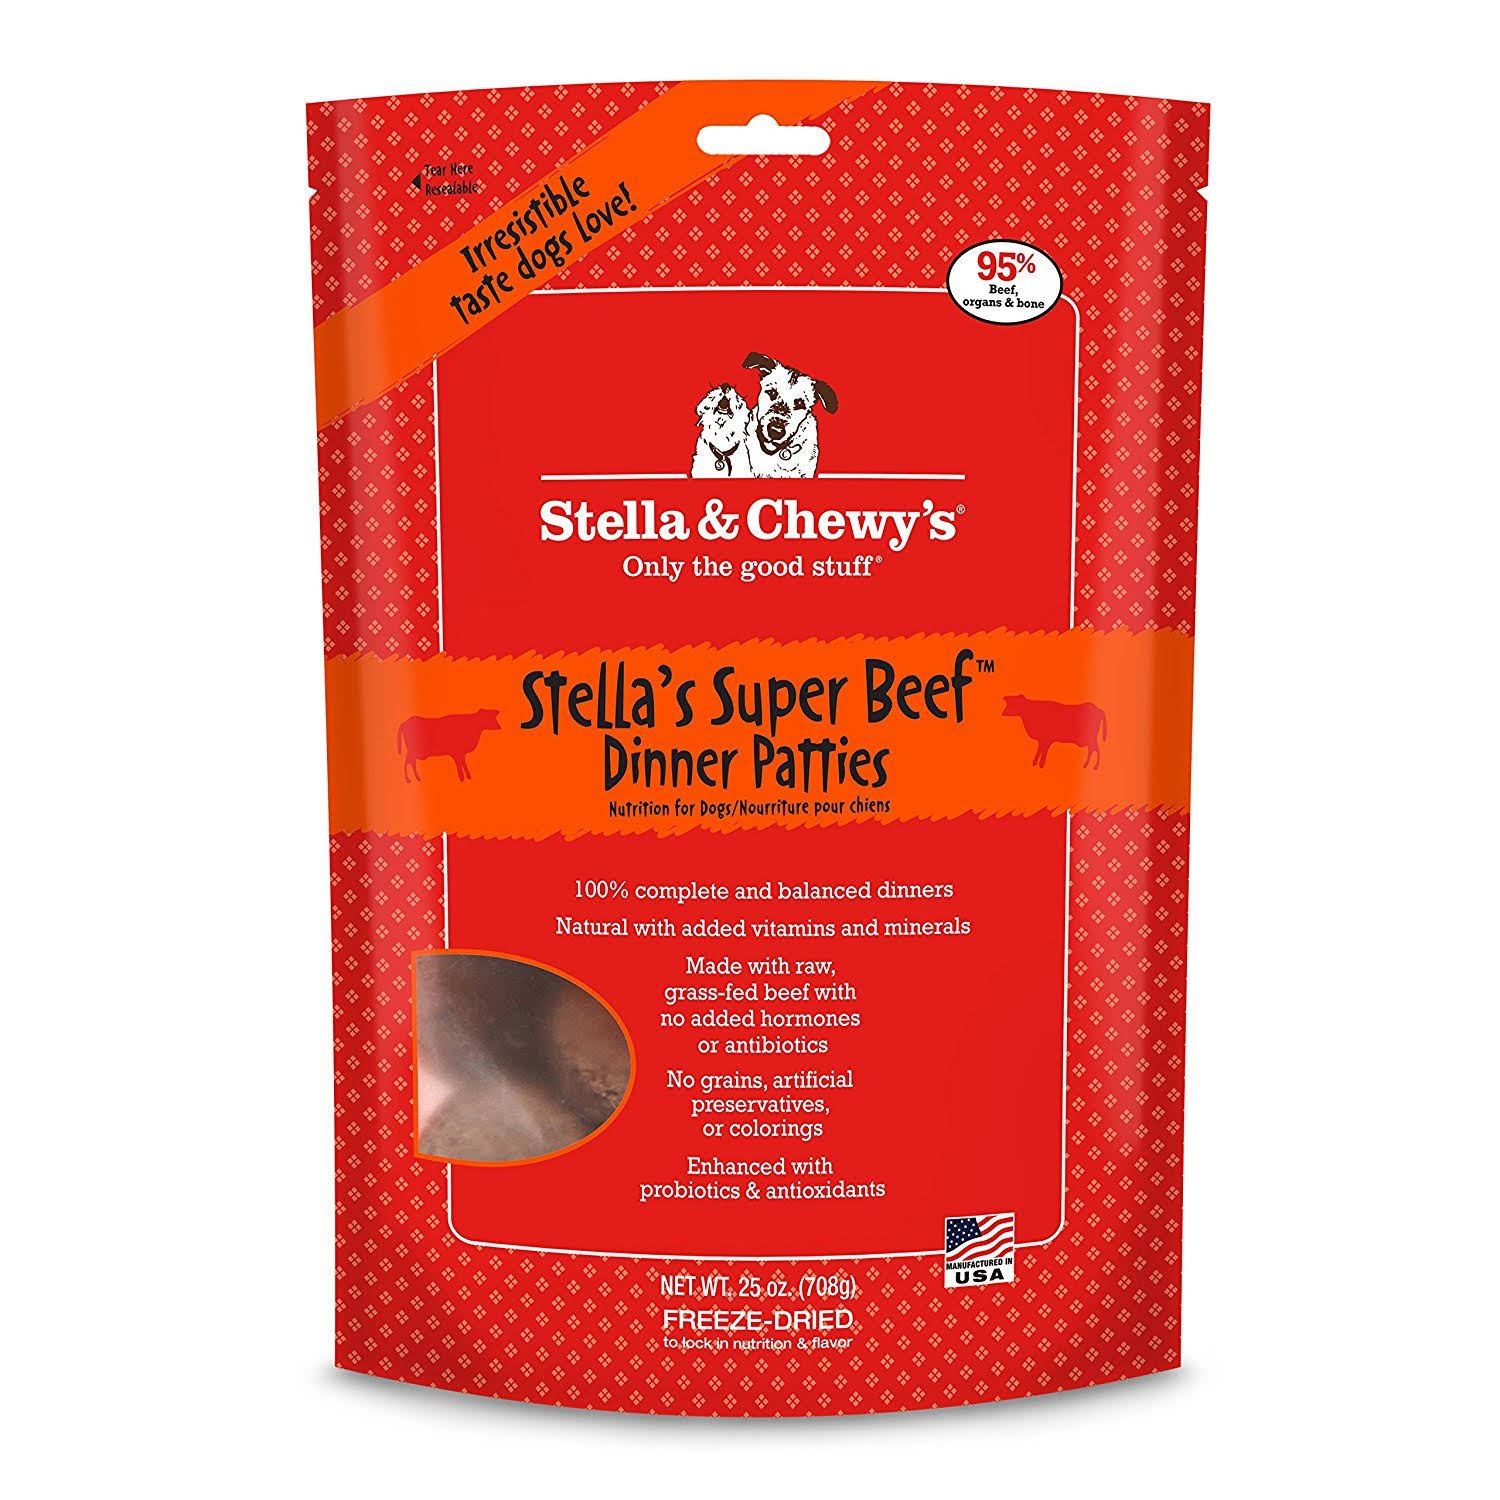 Stella & Chewy's Super Beef Dinner Patties - 705g